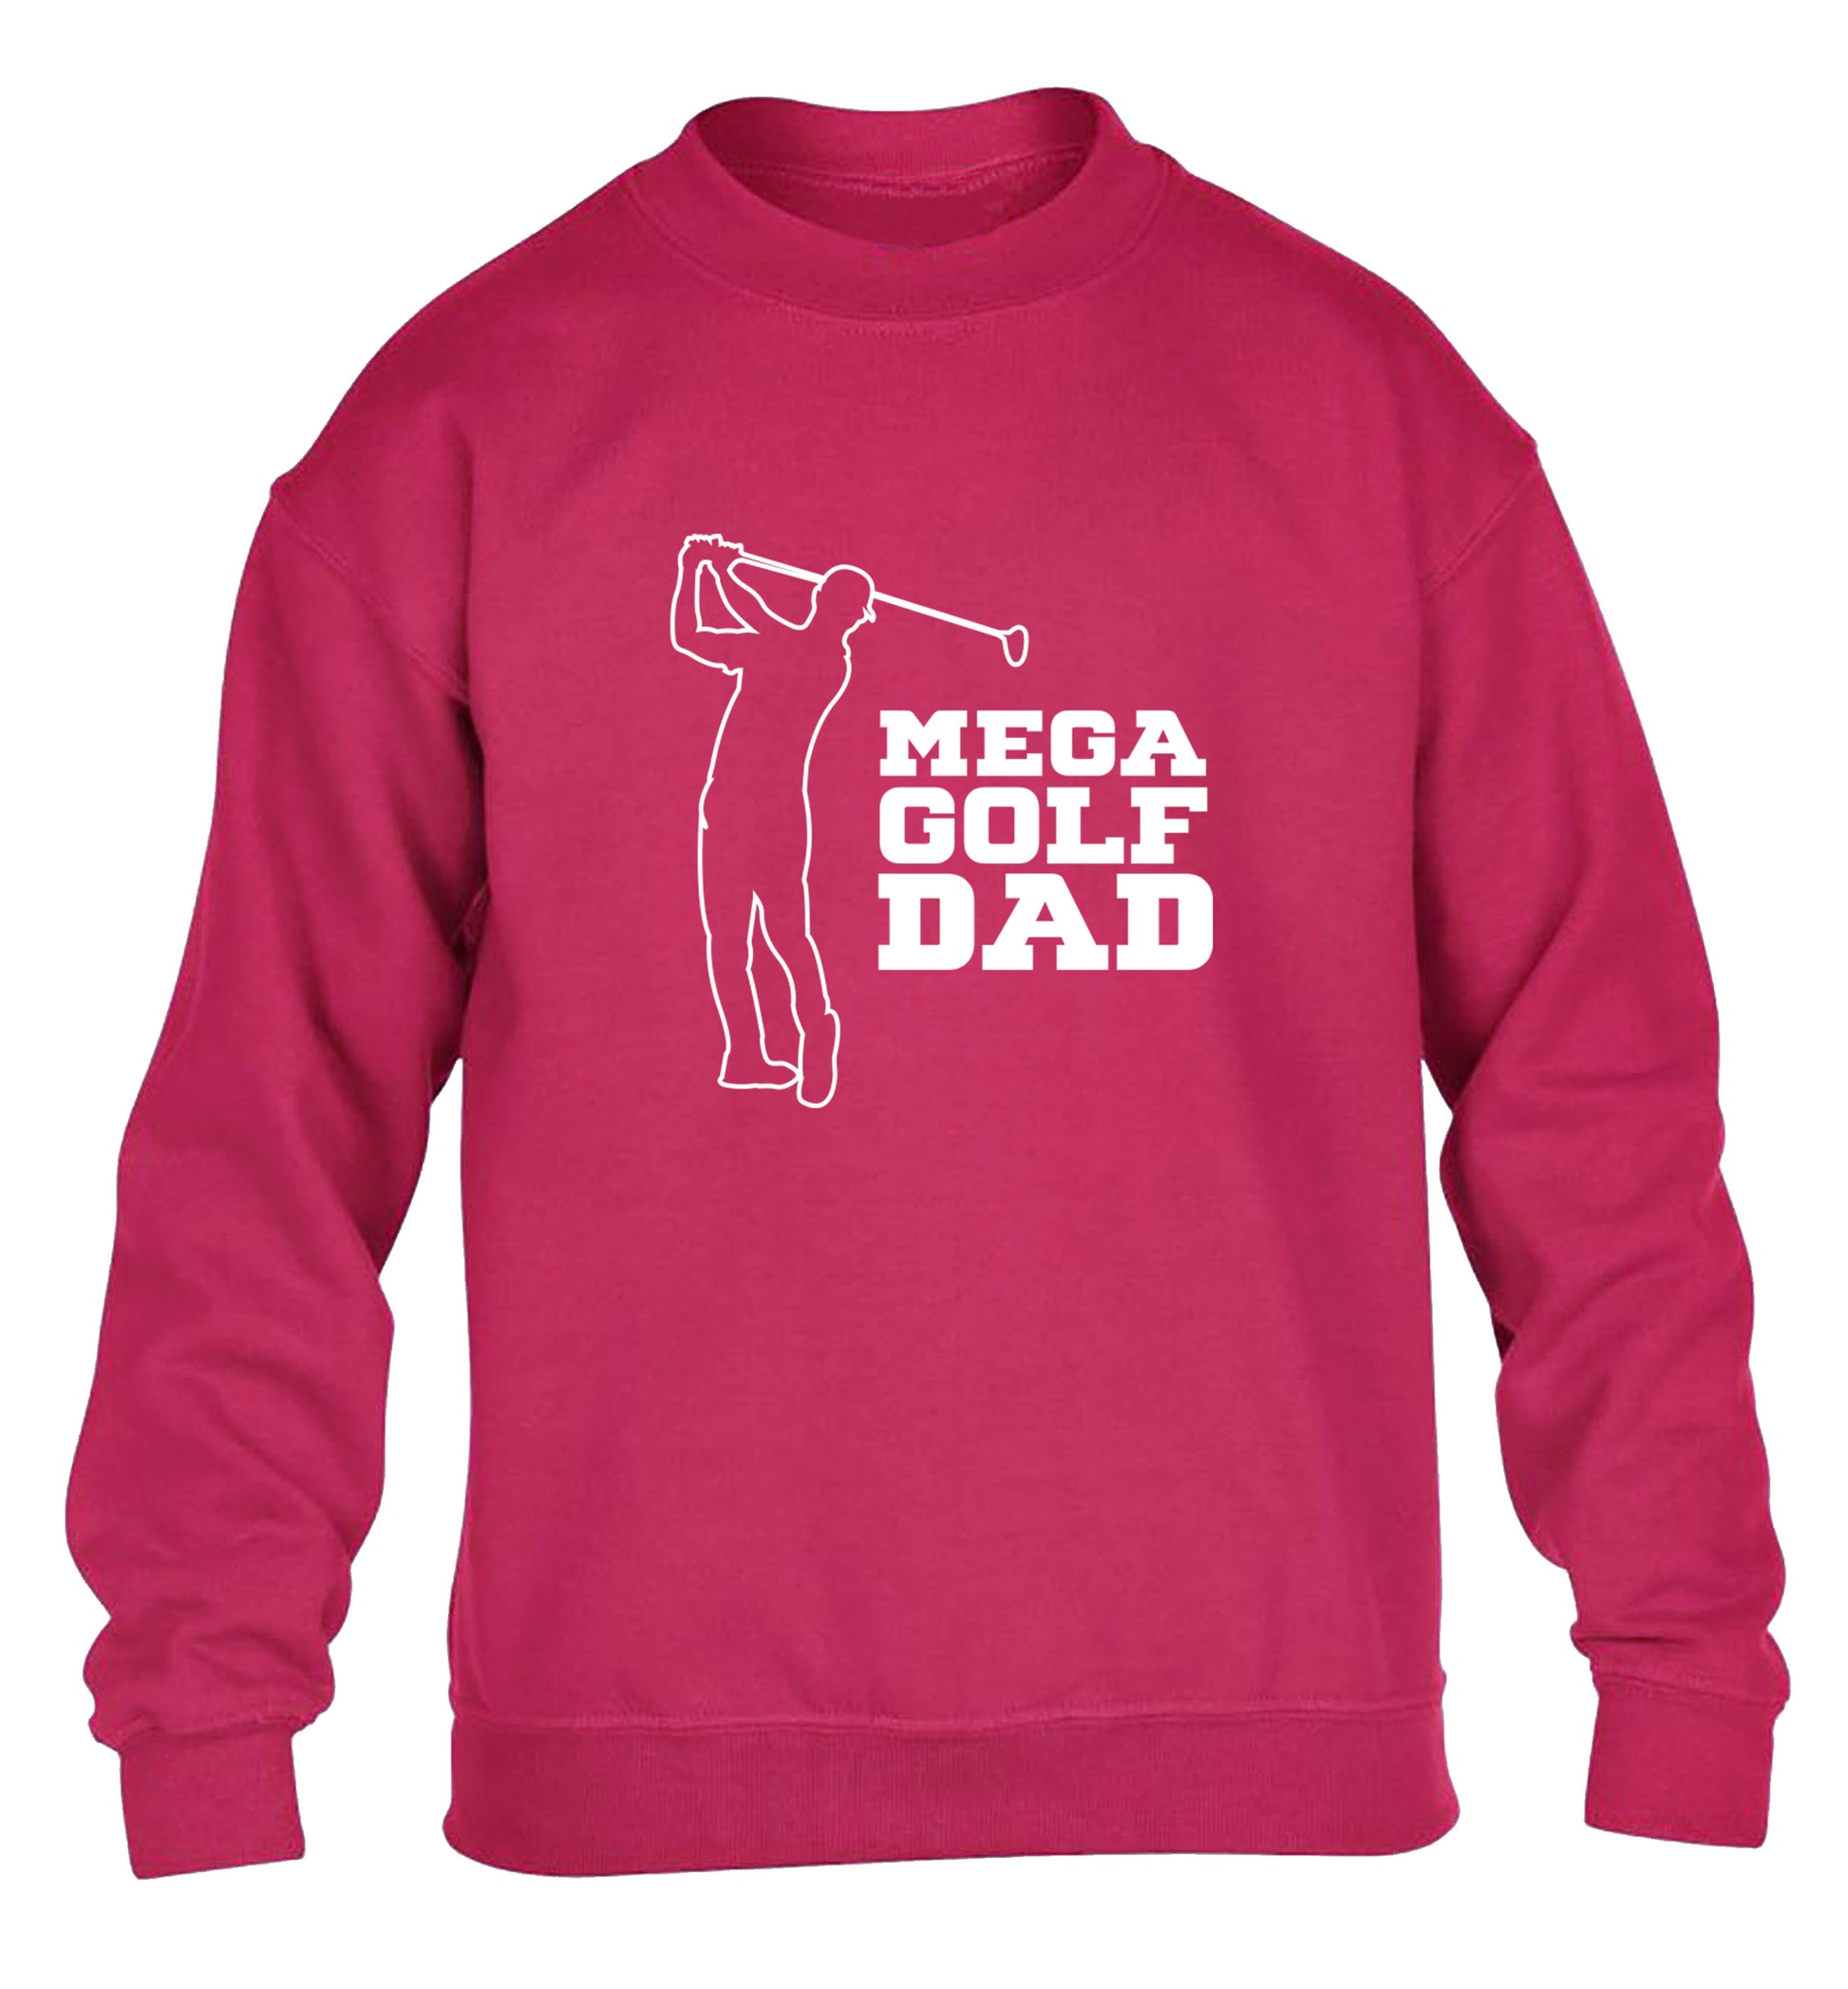 Mega golfing dad children's pink sweater 12-13 Years